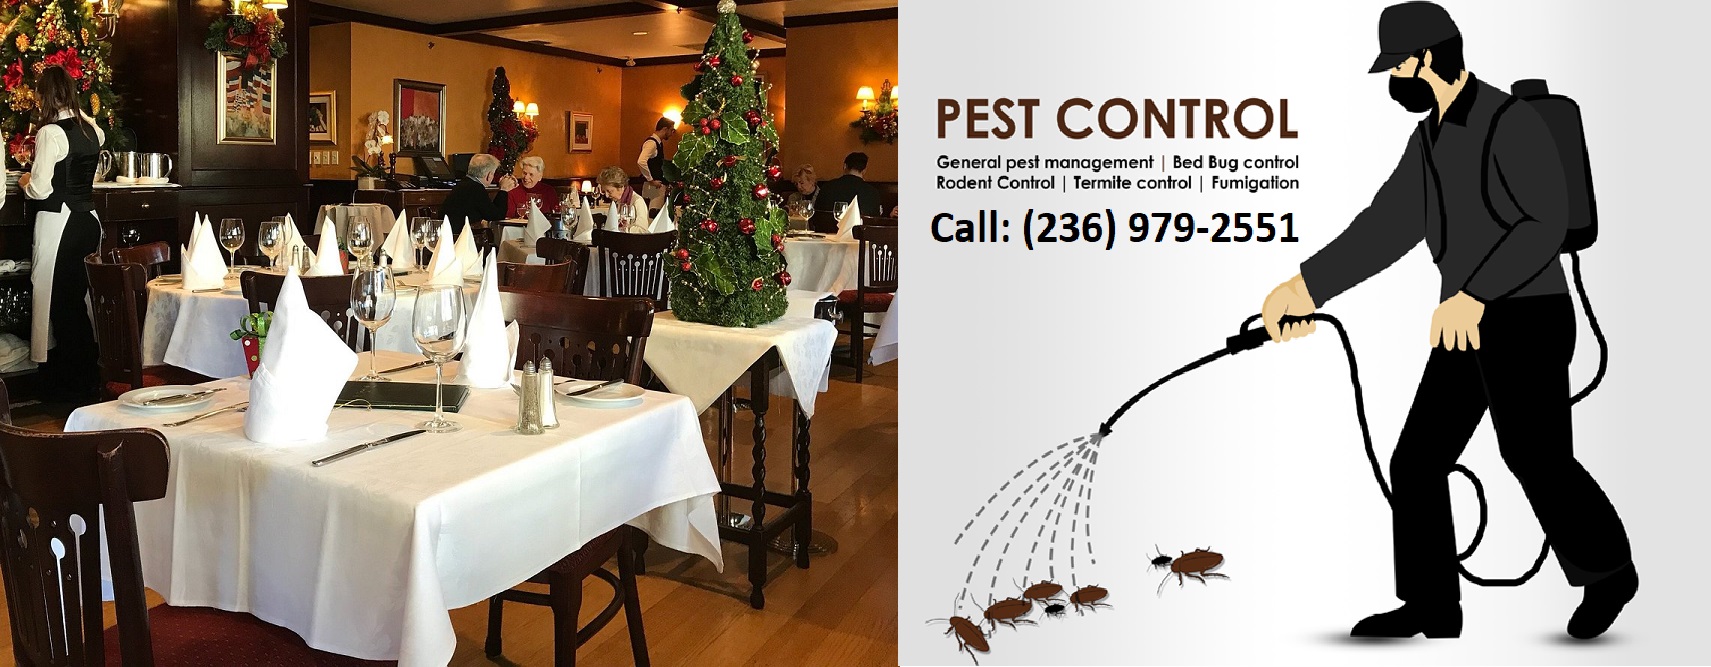 Restaurants Pest Removal Services, Restaurants Pest Removal Services